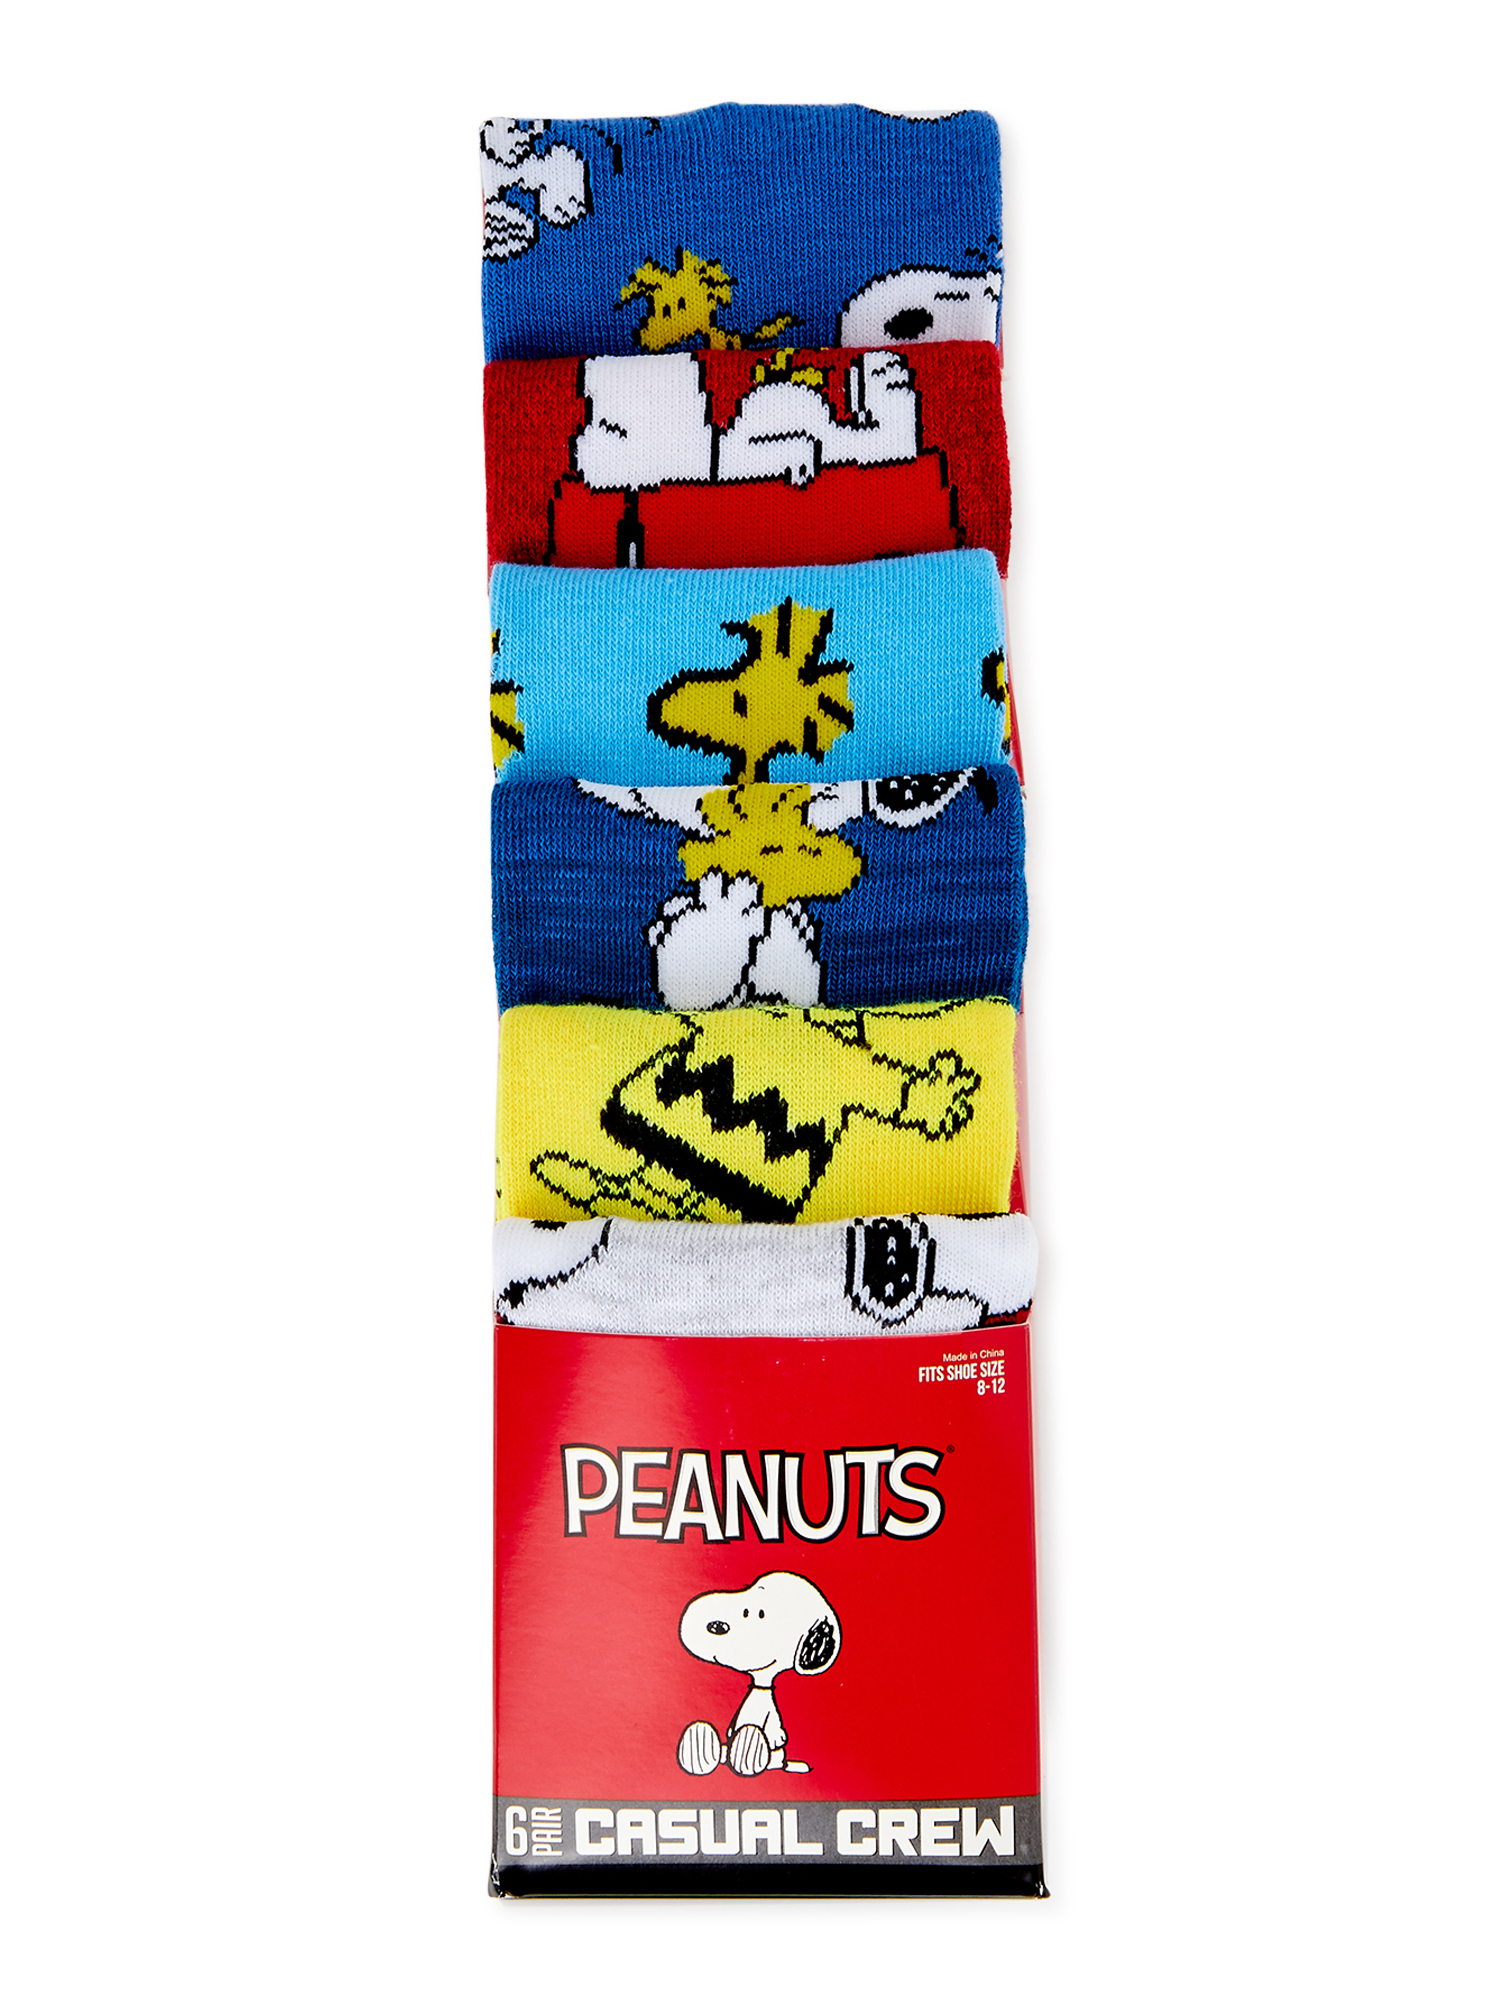 Peanuts Snoopy Men’s Crew Socks, 6-Pack - image 2 of 2